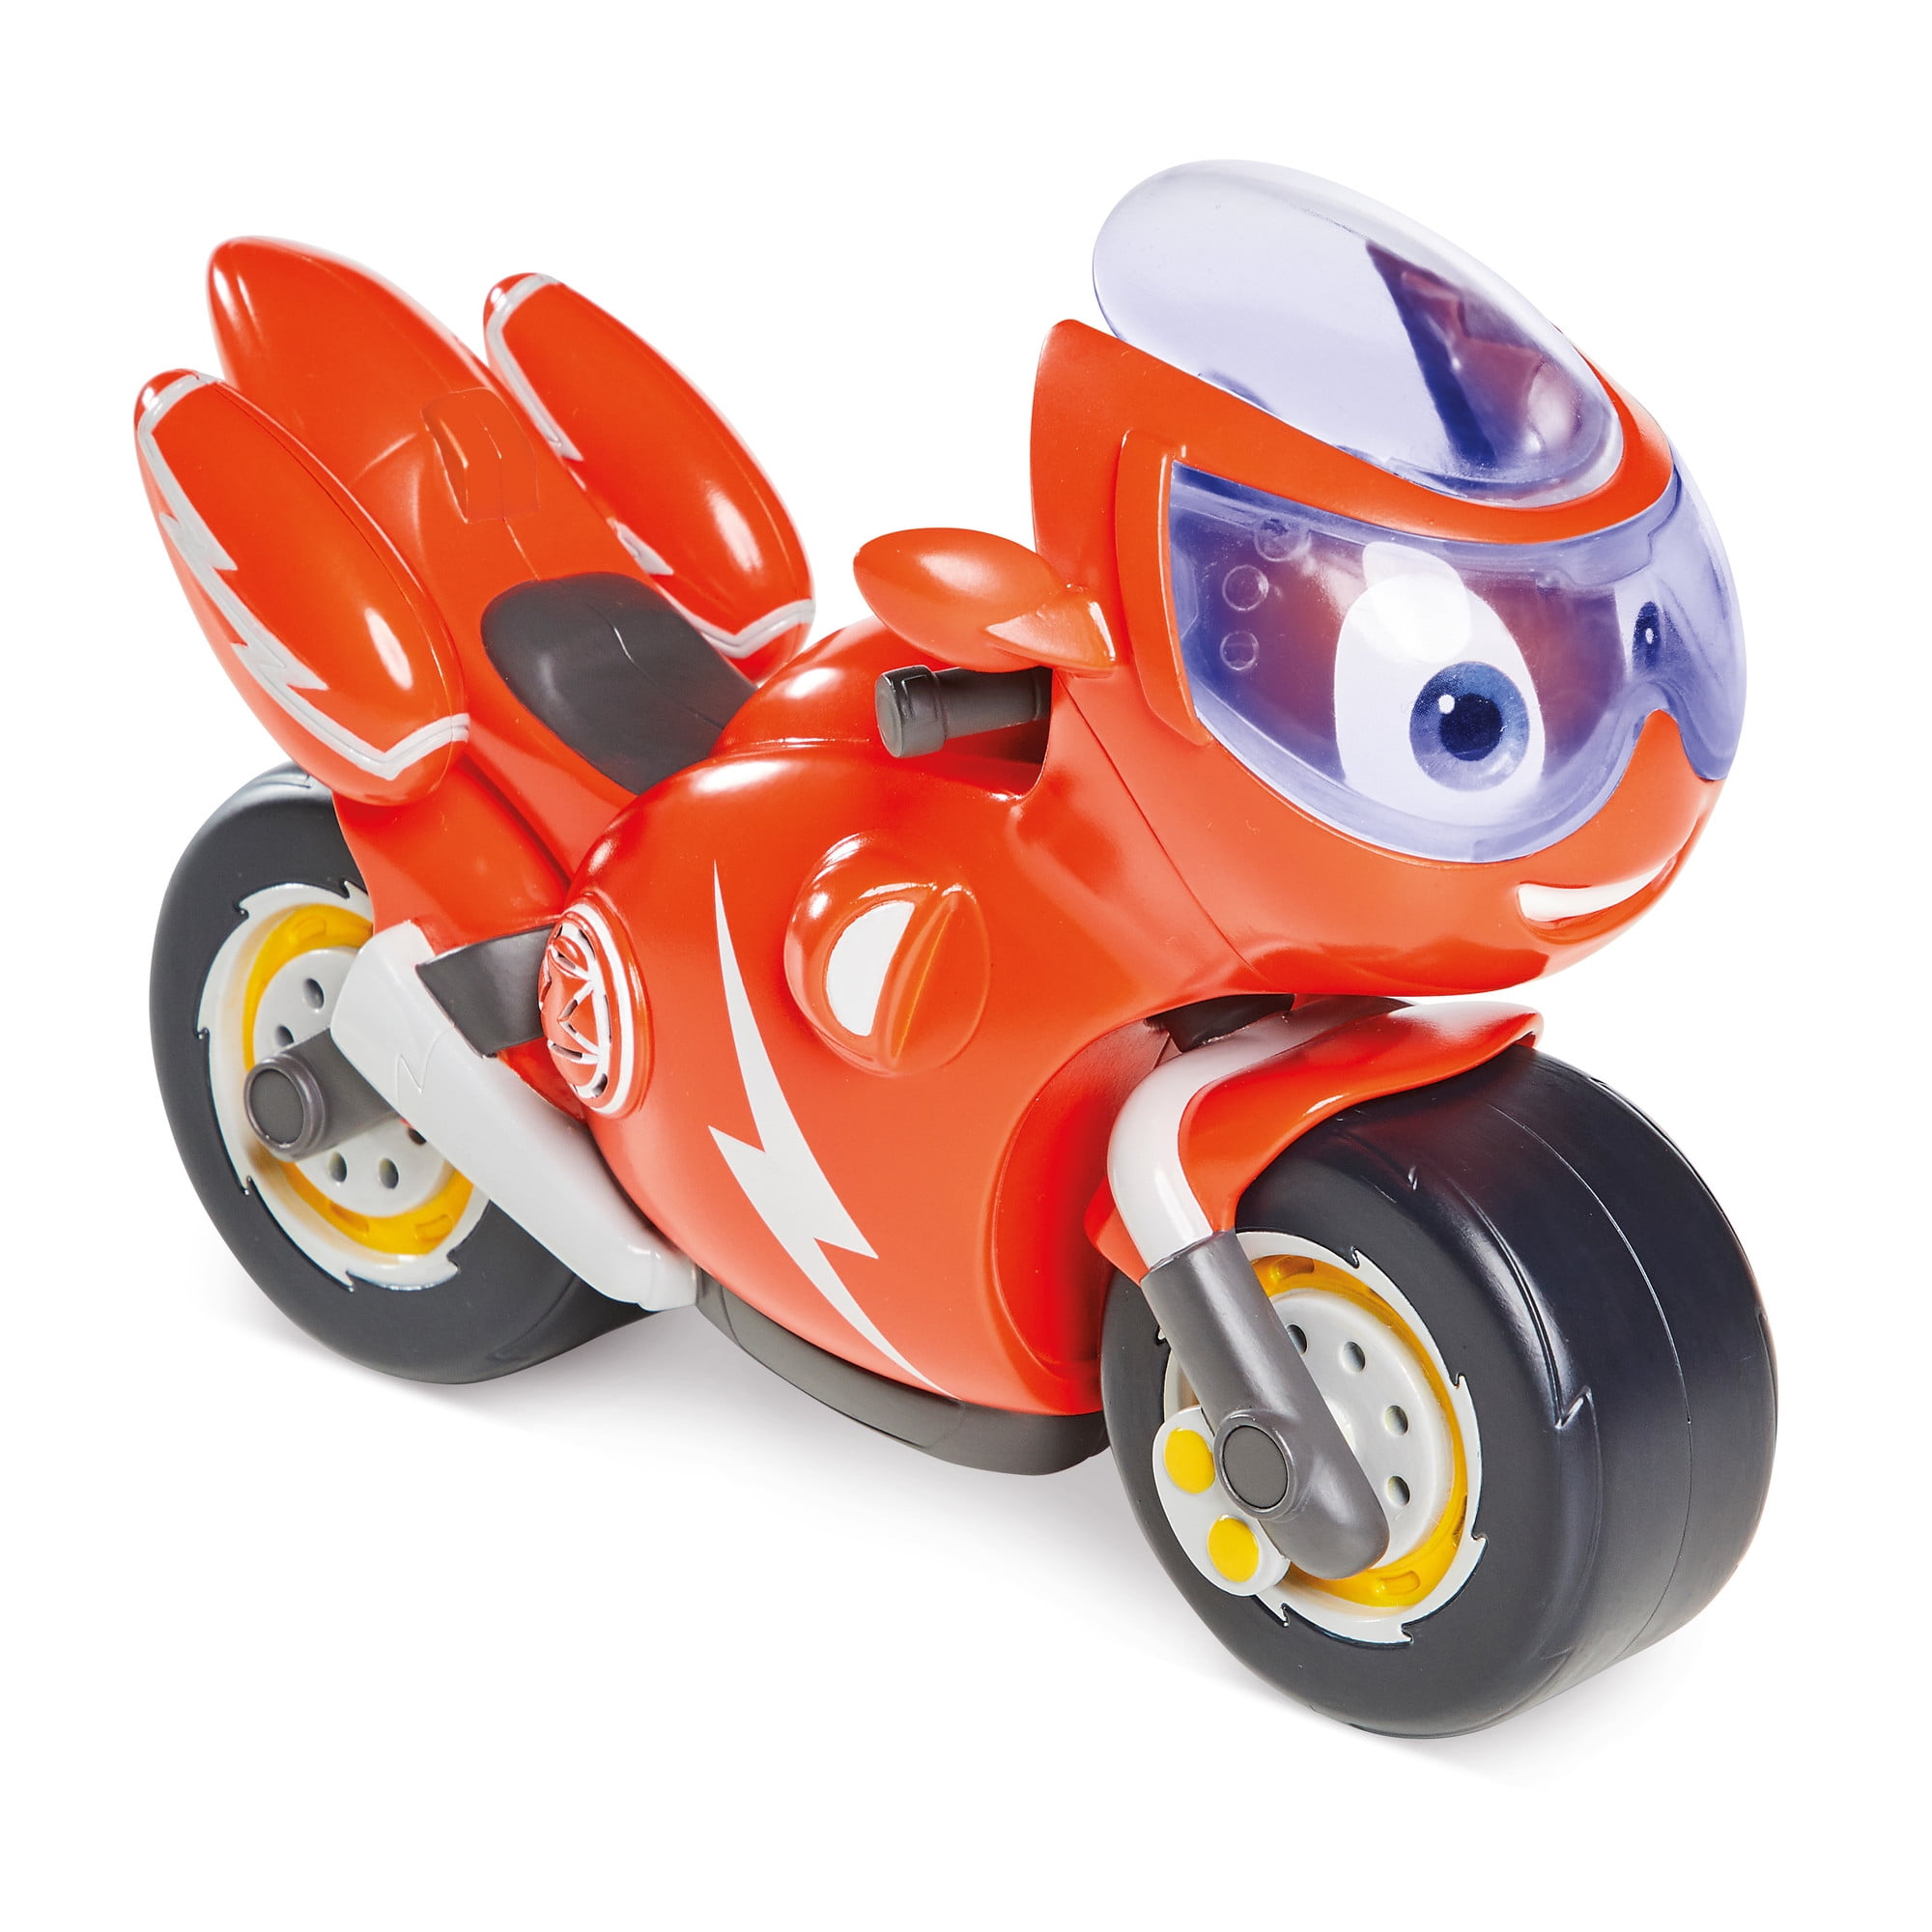 Ricky Zoom Remote Control Motorbike Toy 